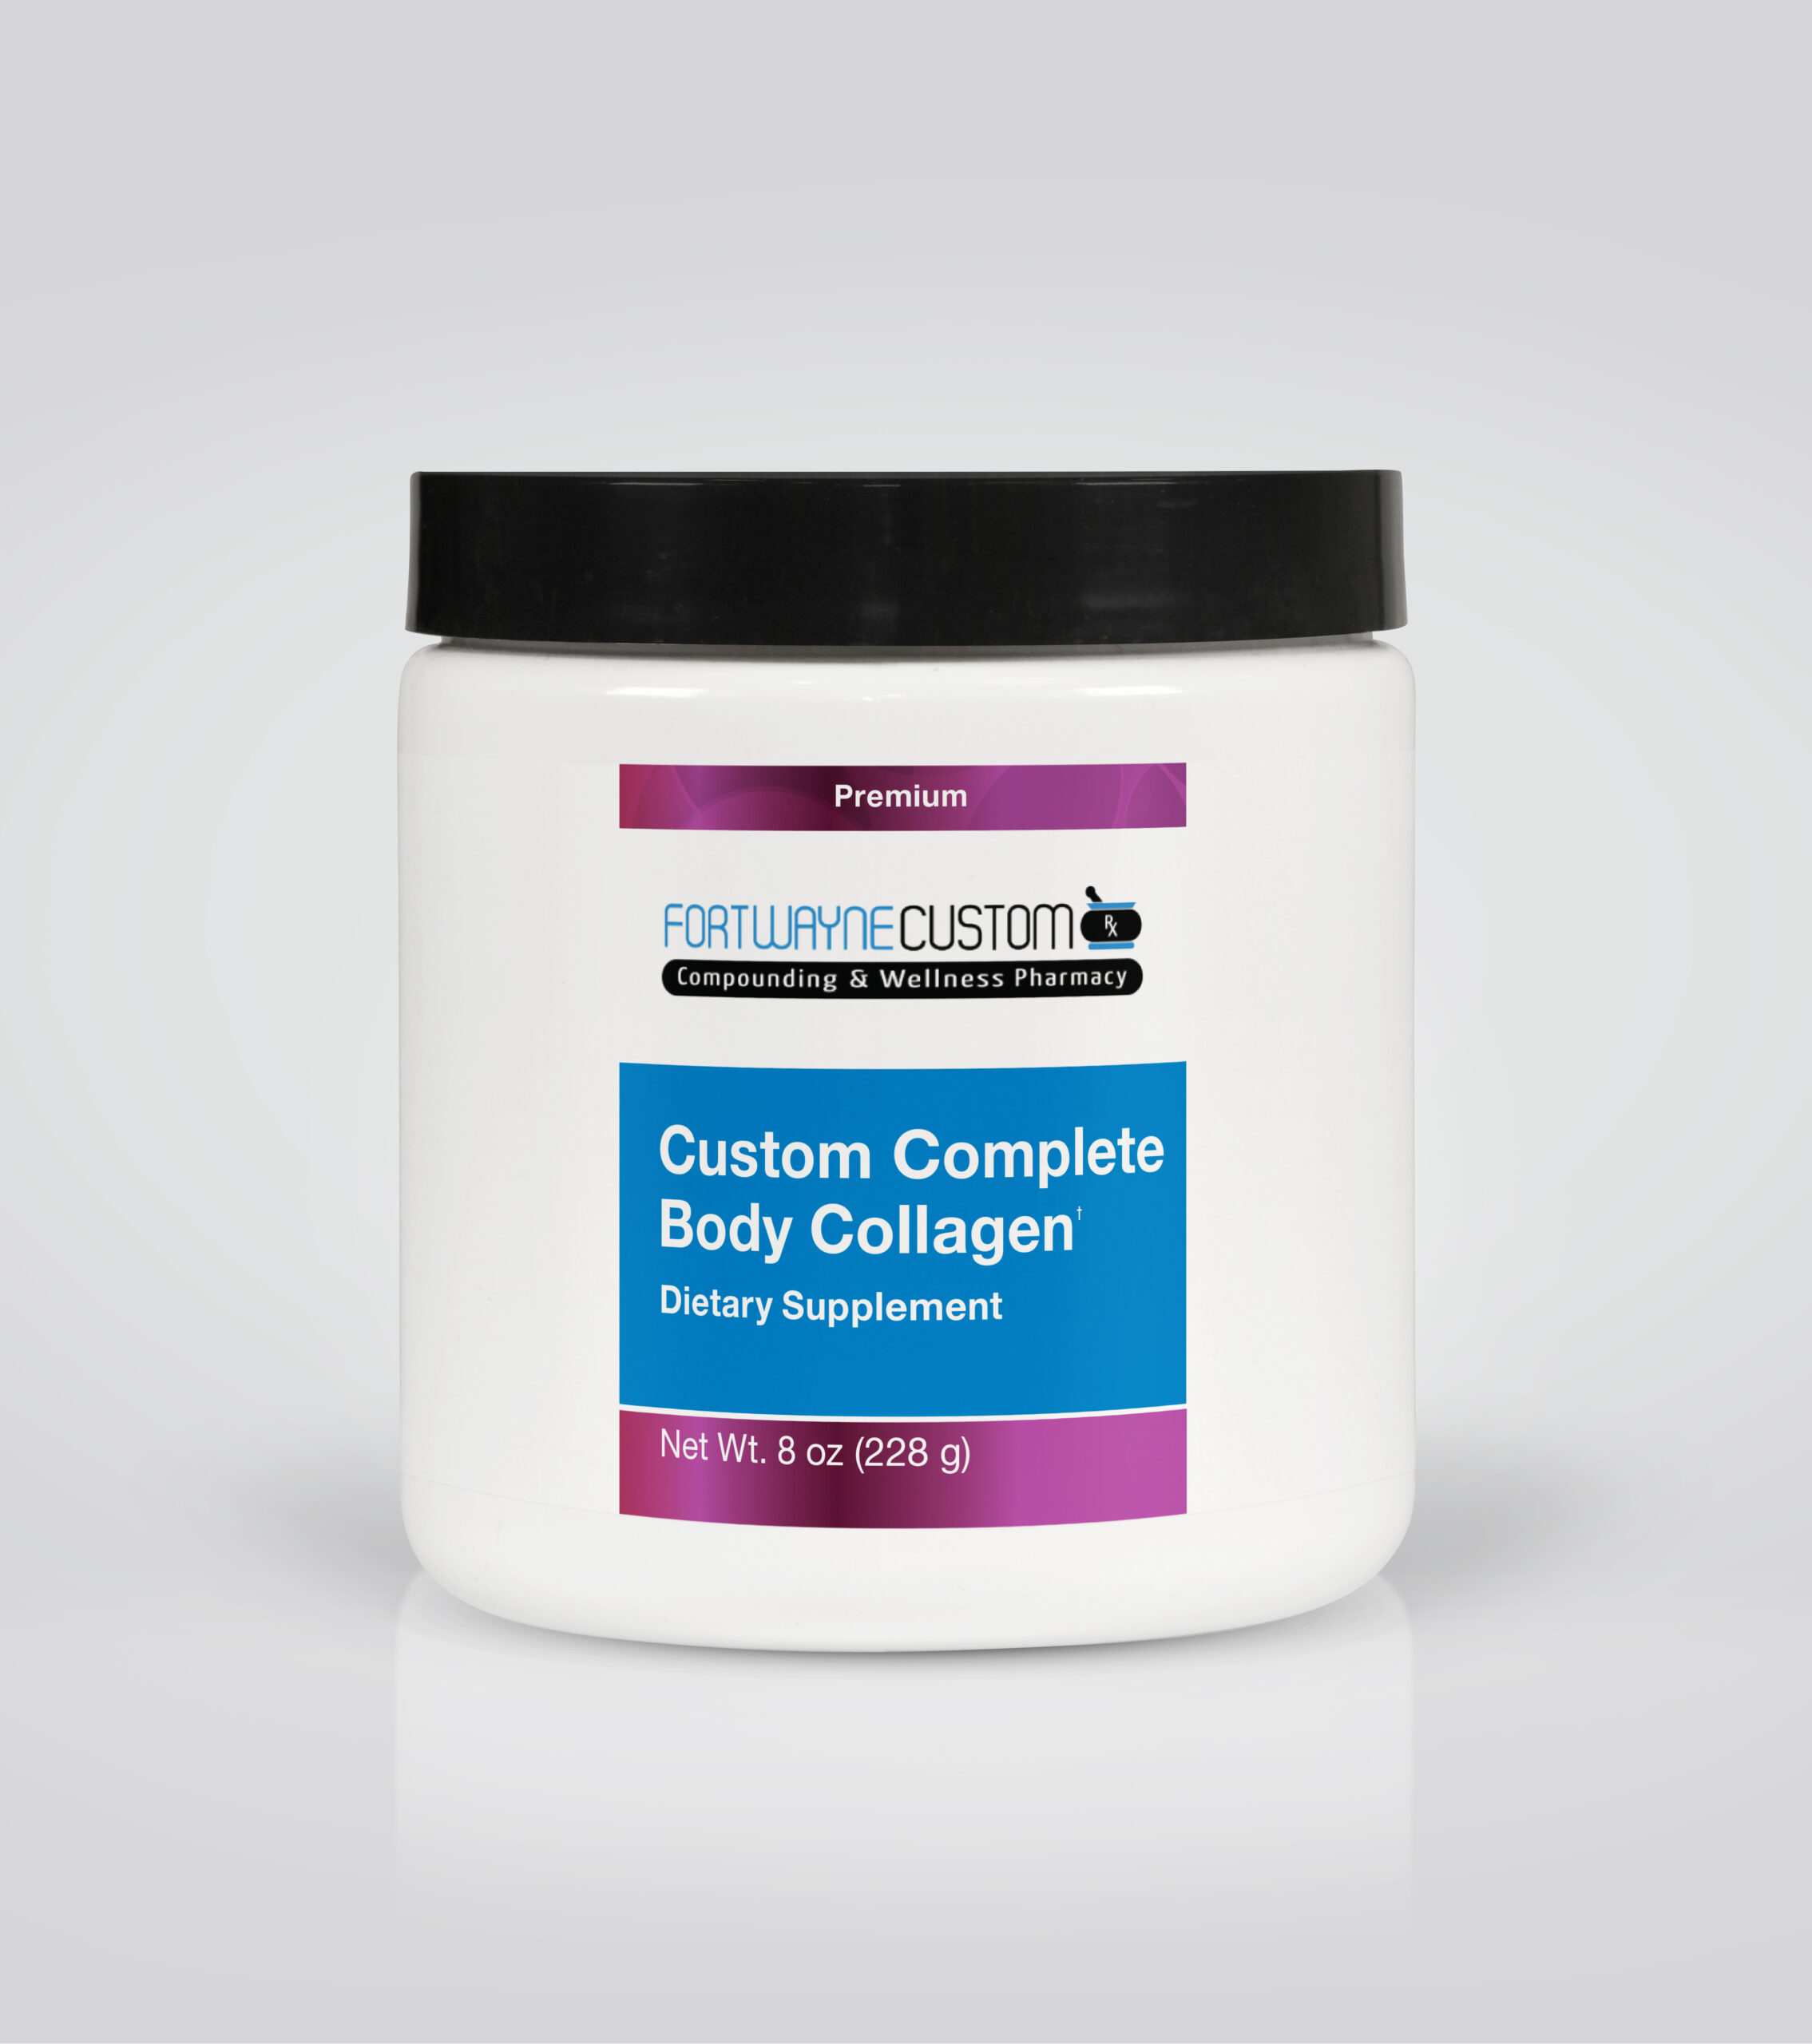 Custom Complete Body Collagen - Fort Wayne Custom Rx Store